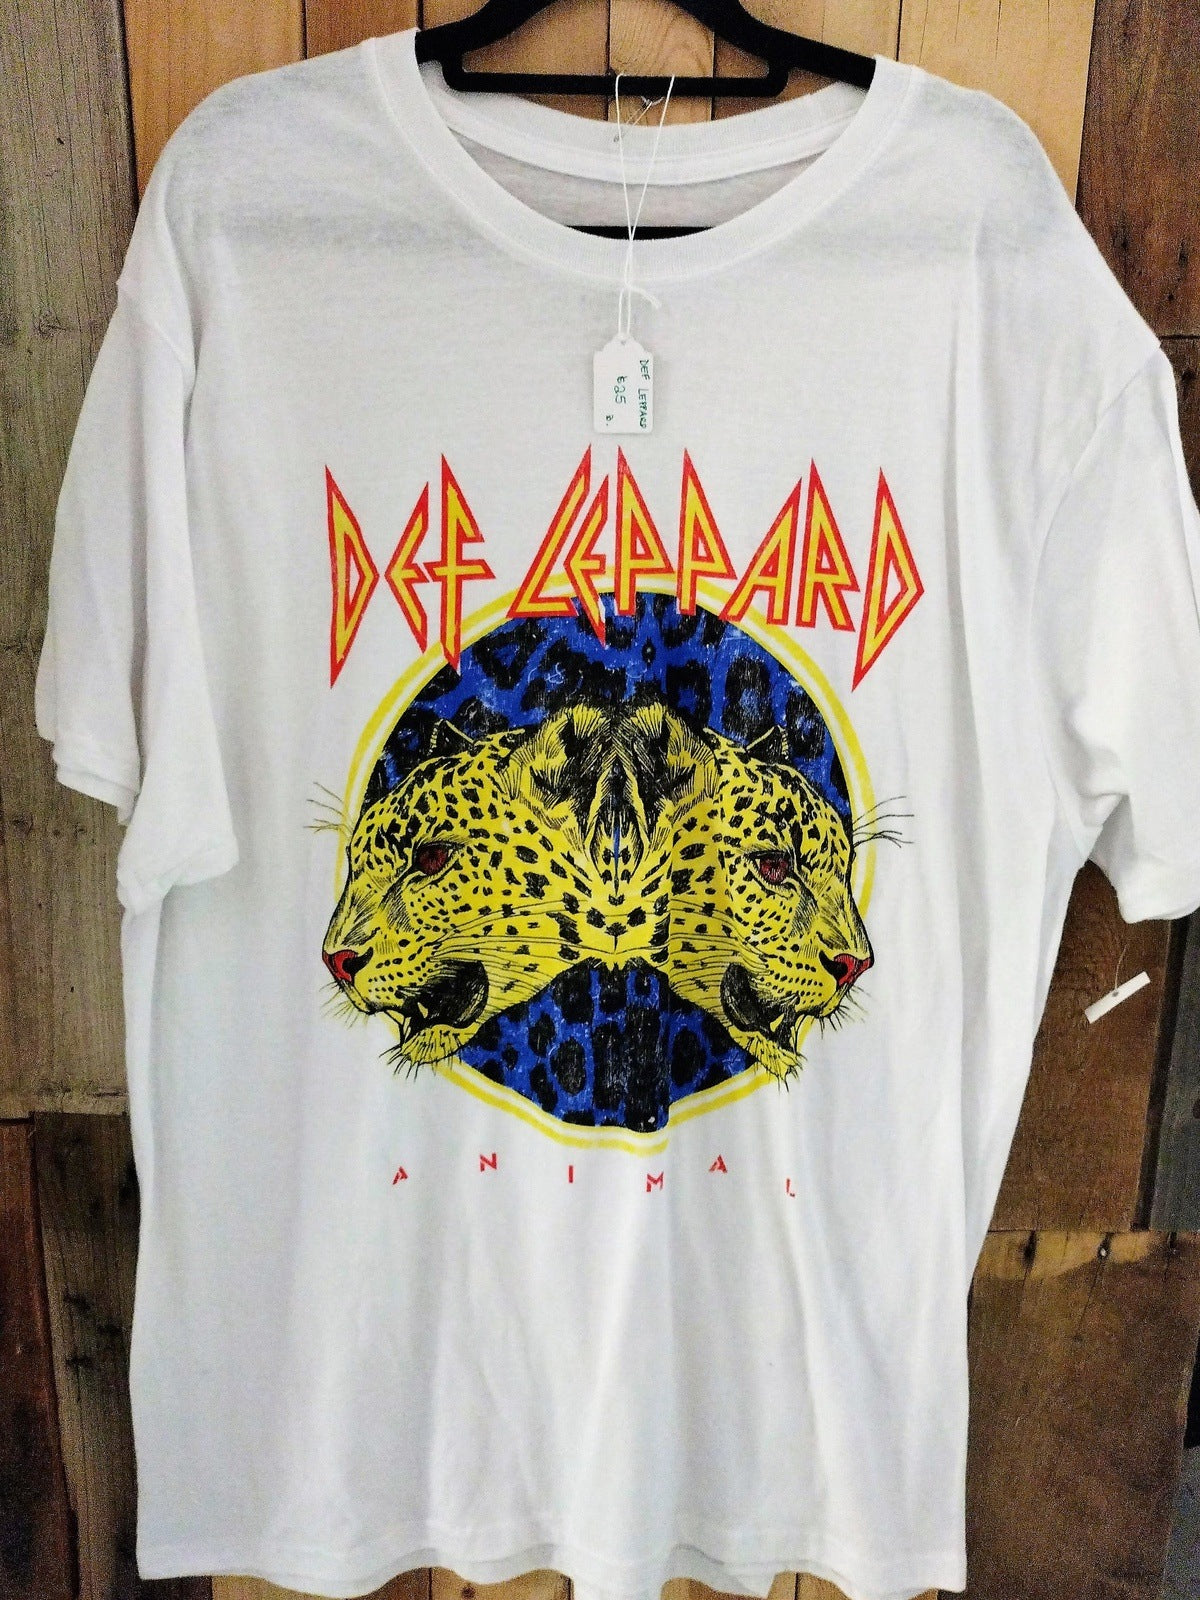 Def Leppard Official Merchandise "Animal" T Shirt Size L/XL